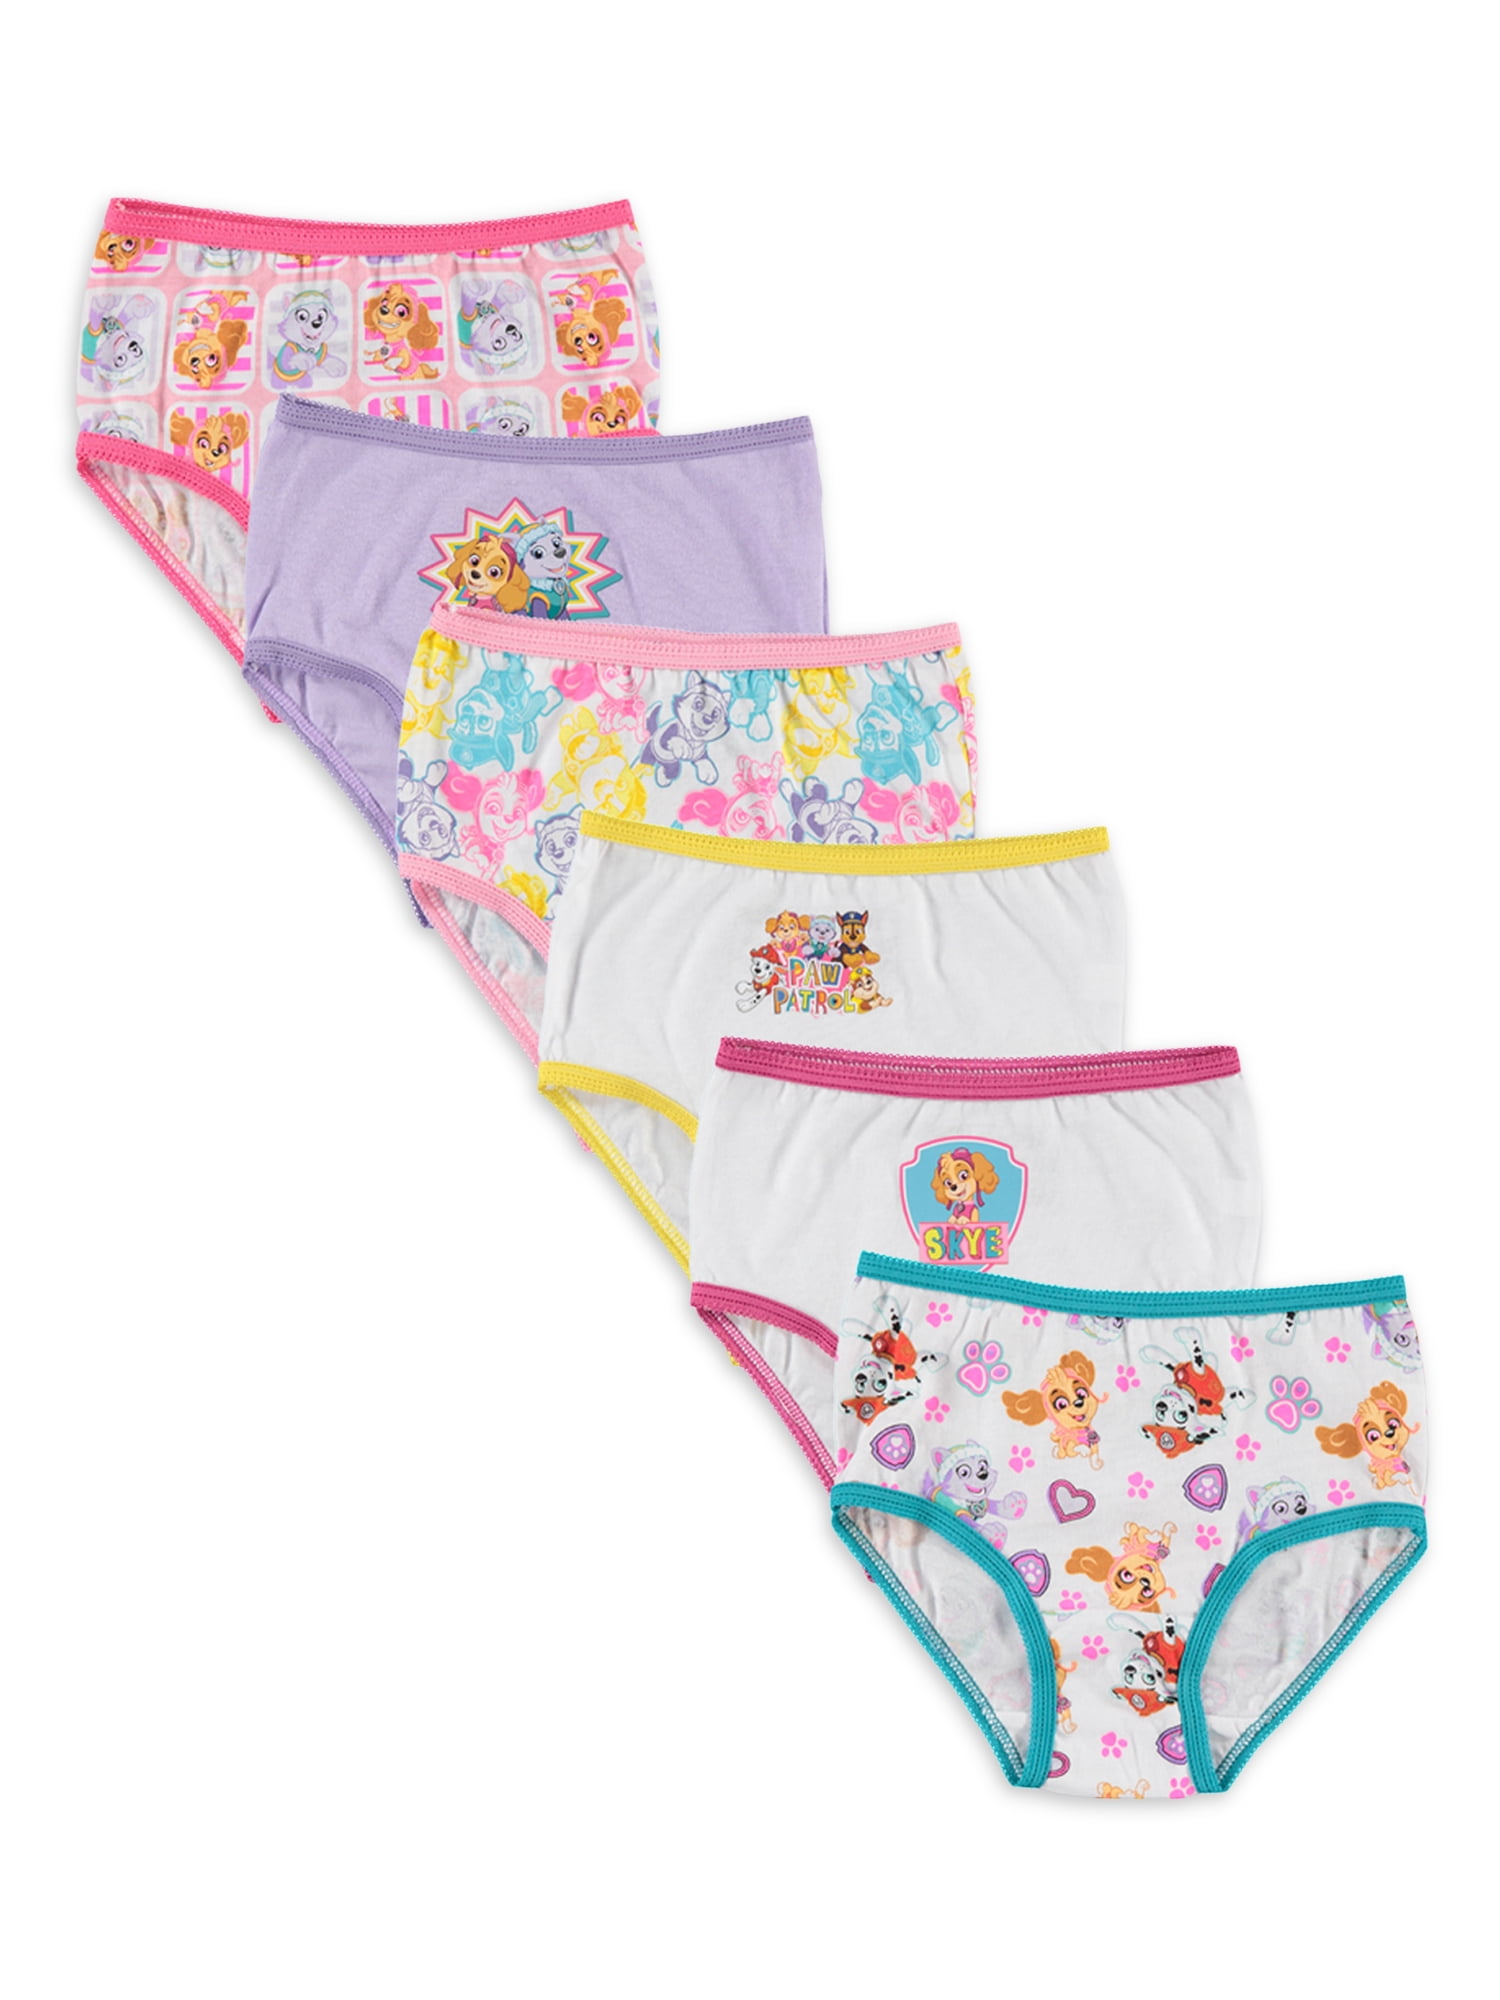 Girls Childrens Paw Patrol Knickers Briefs Pants Underwear 3 Pack Aged 1-5 Ys 